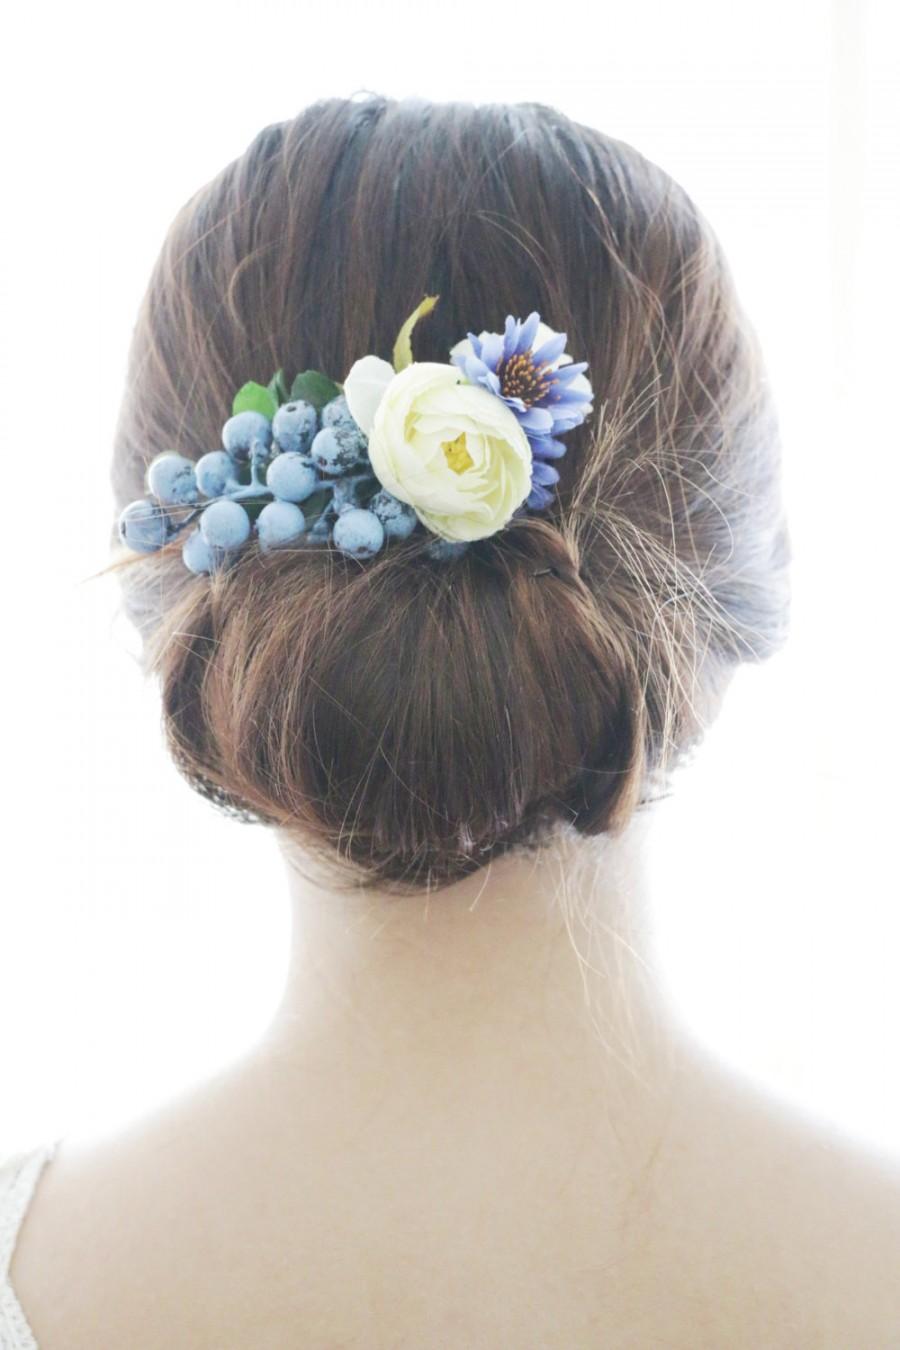 زفاف - Bridal Hair Accessory, Blue Daisy & blueberries, Bridal Hair comb hairpiece flower, Bridesmaid, Rustic Vintage outdoor wedding woodland